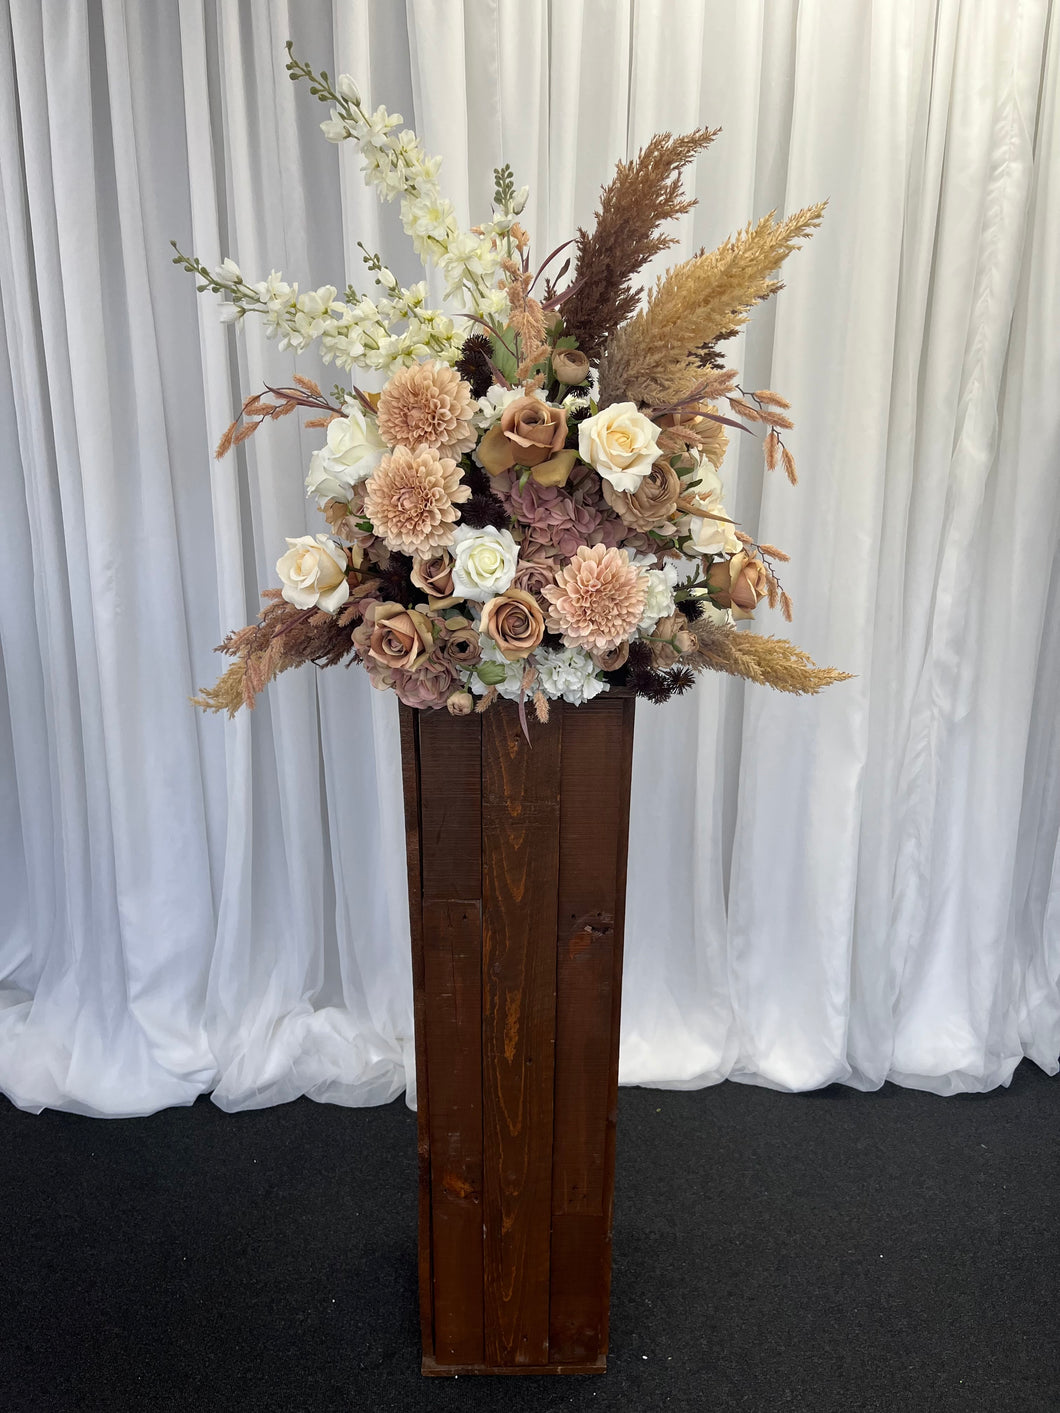 Rustic wooden plinth with Elizabeth floral